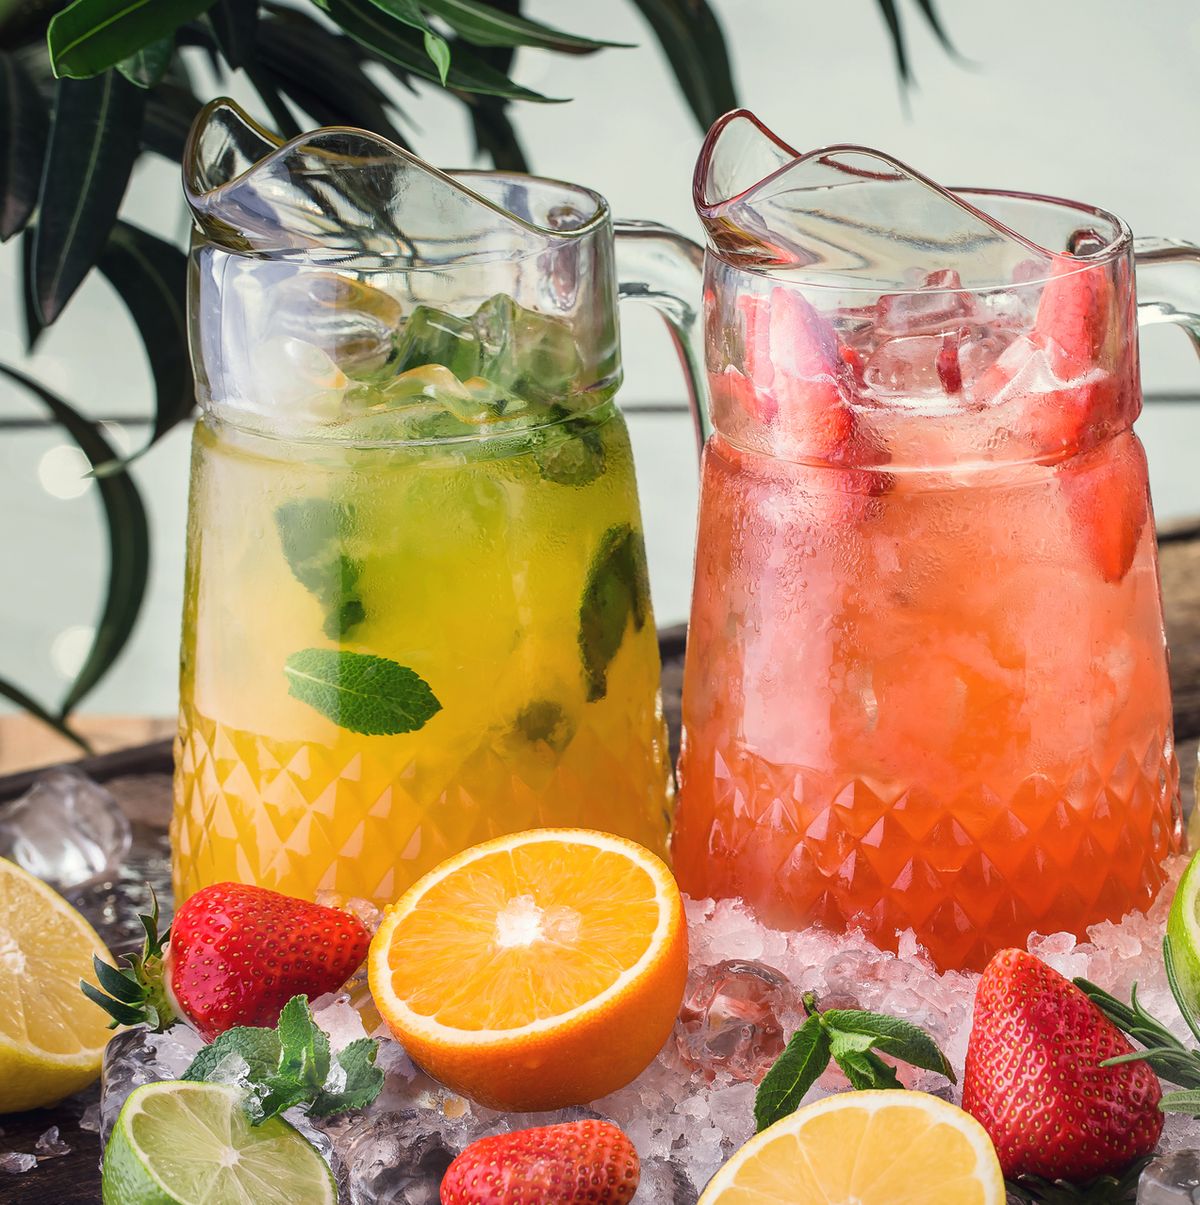 three jugs with fresh drinks from strawberry, orange and lemon juice, detox citrus water